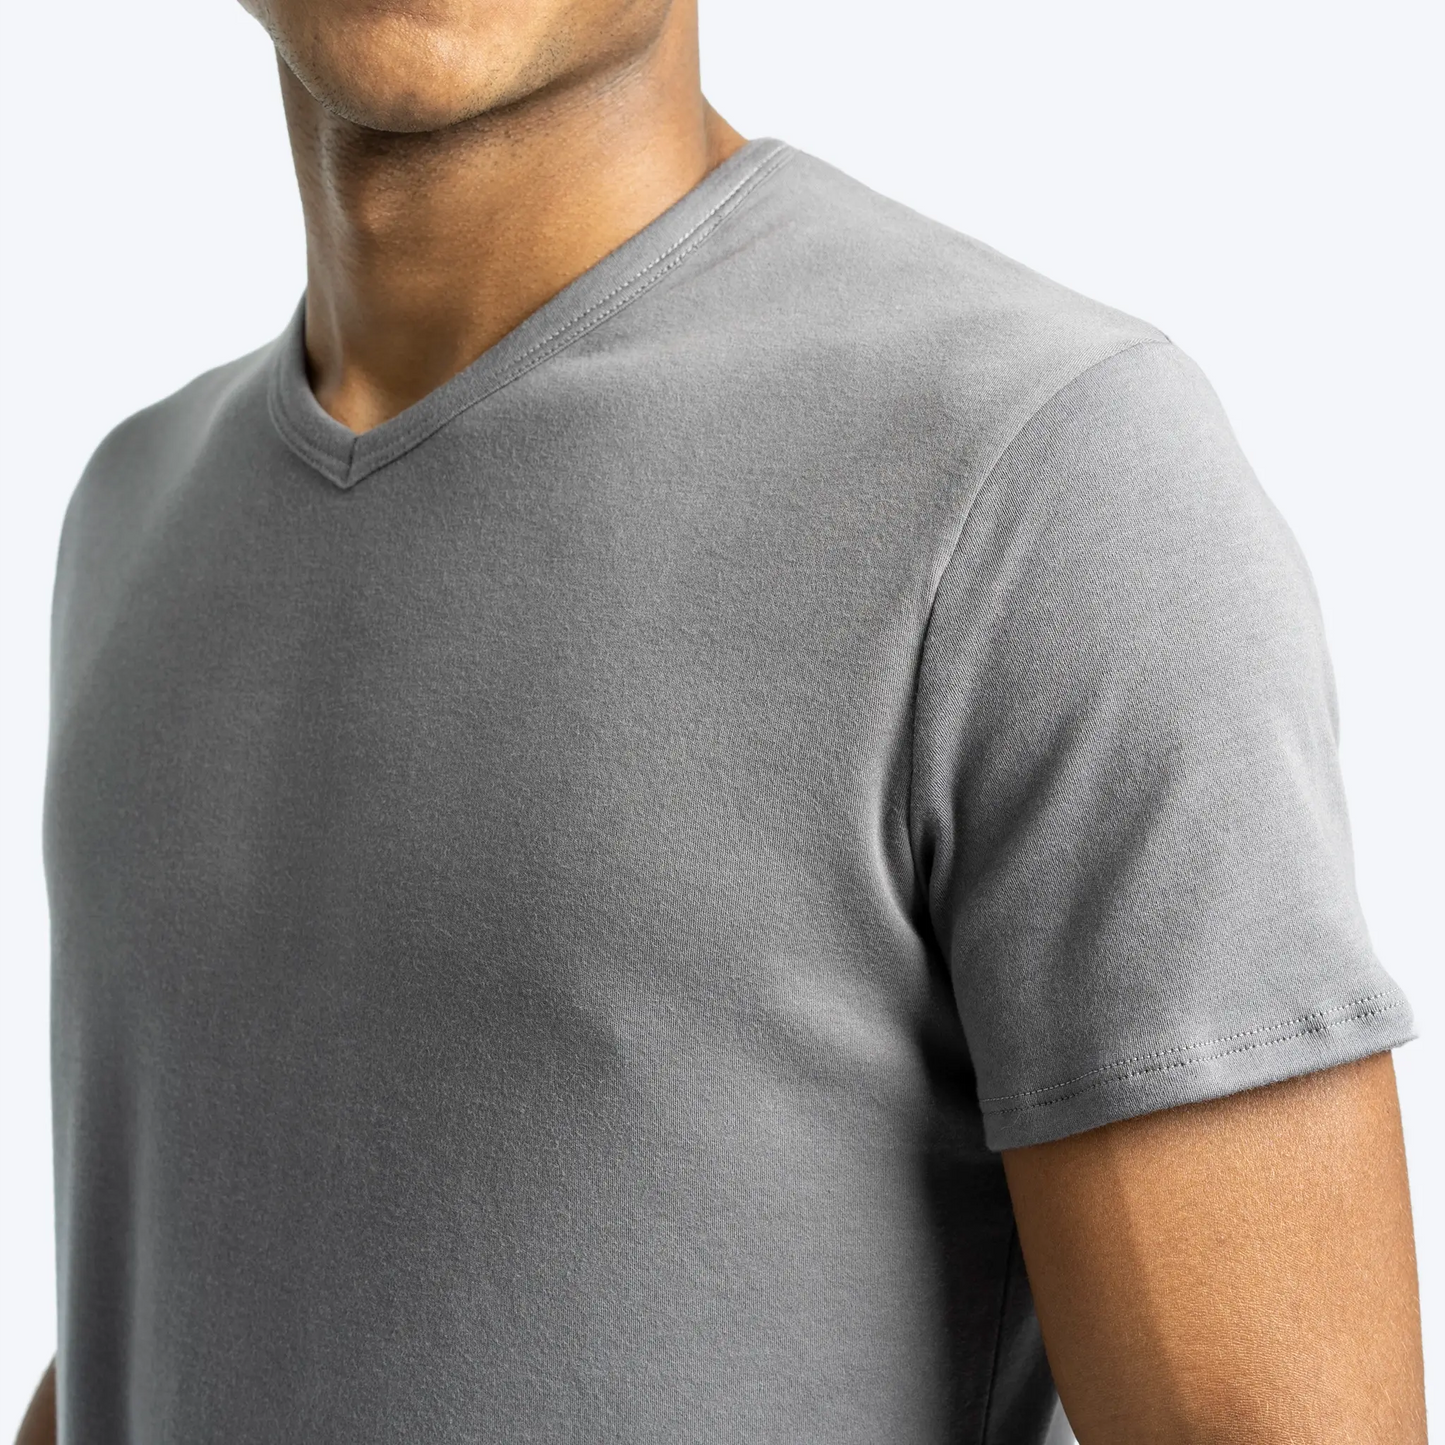 mens comfortable fit tshirt vneck color natural gray